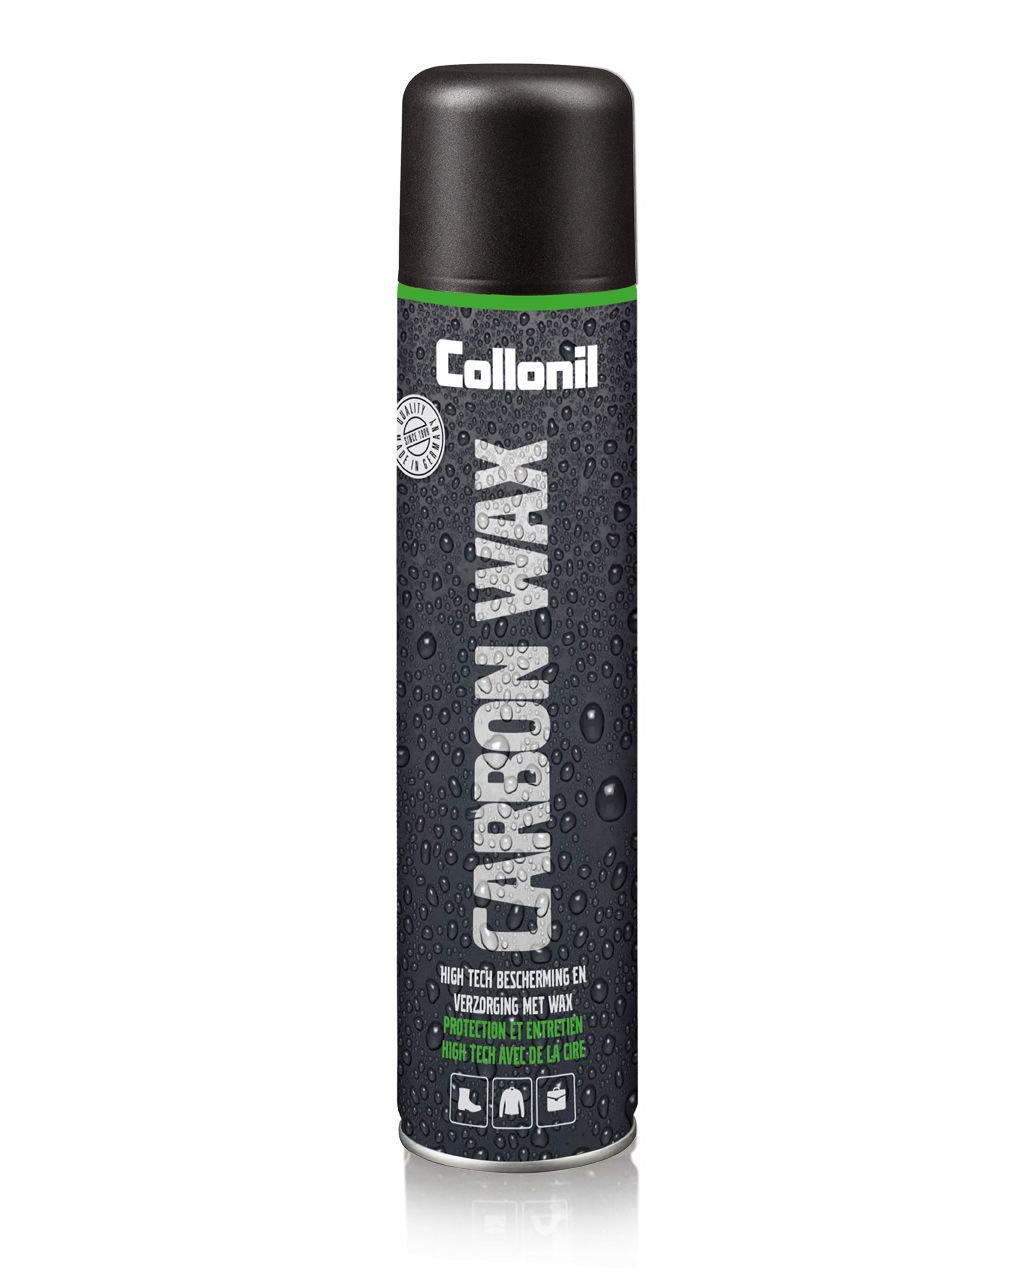 Collonil Carbon Wax spray 300 ml Naturel 028842-94-0